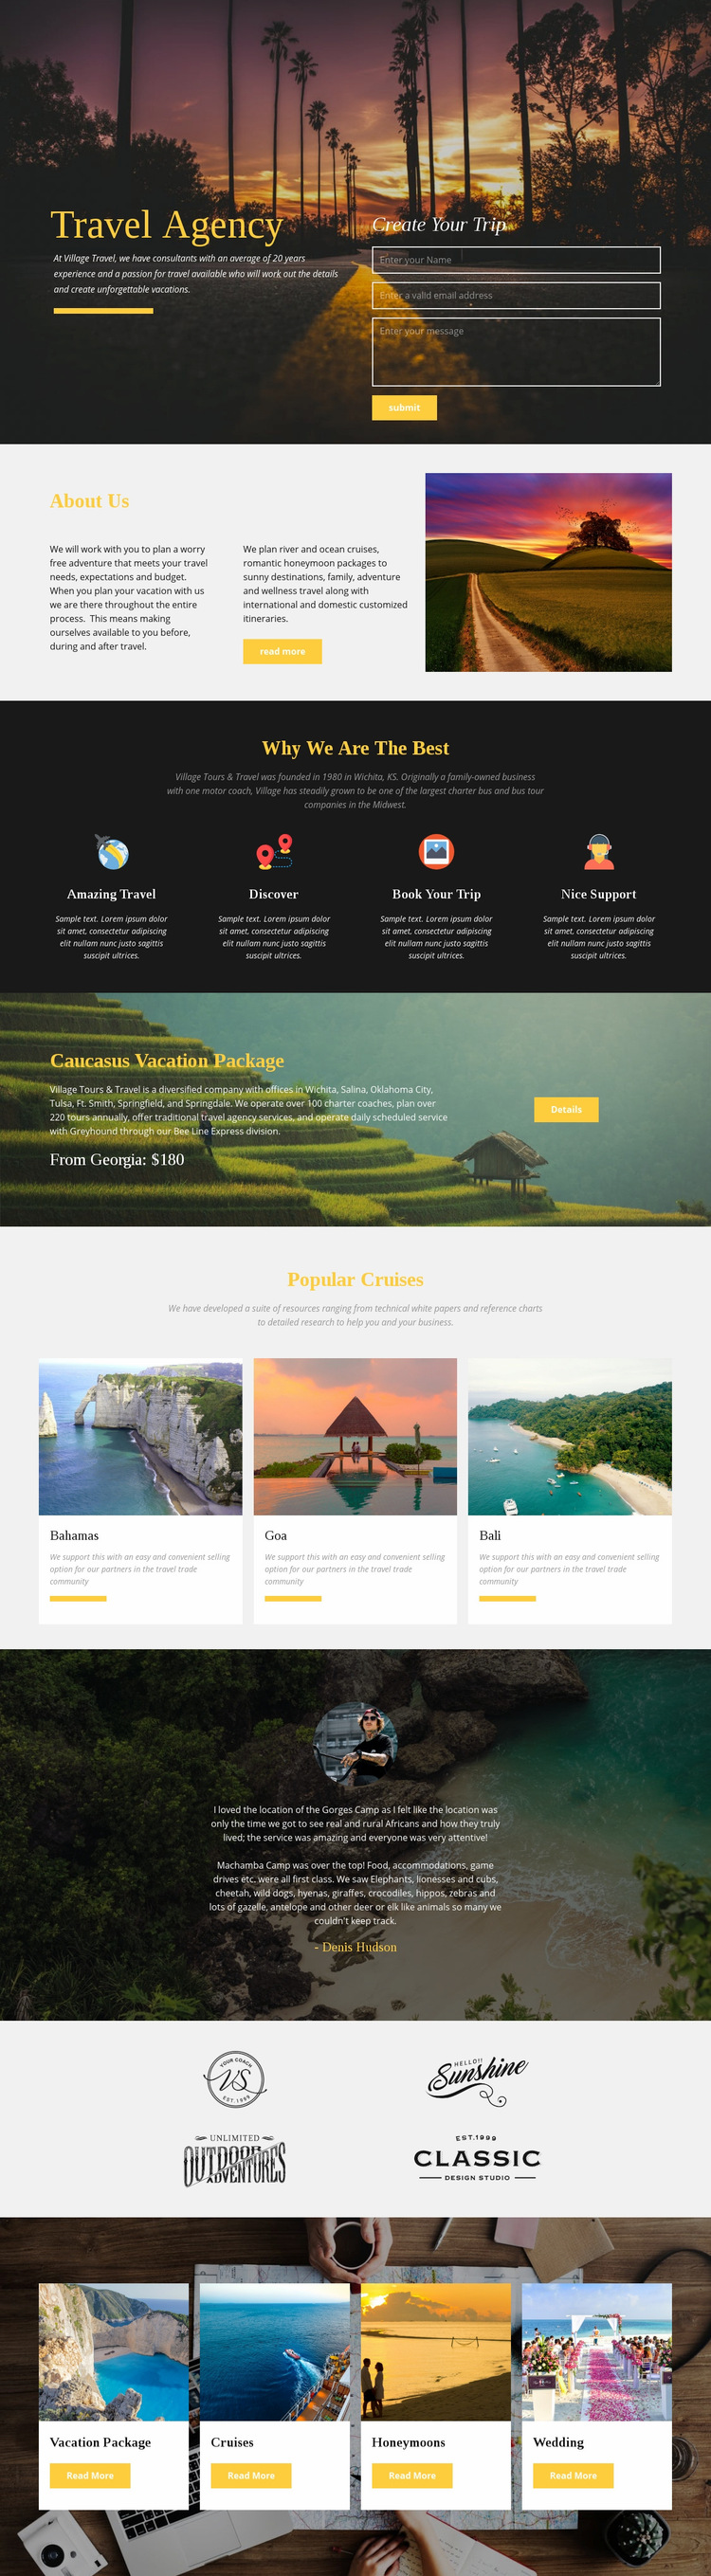 African safari tour company Web Page Design